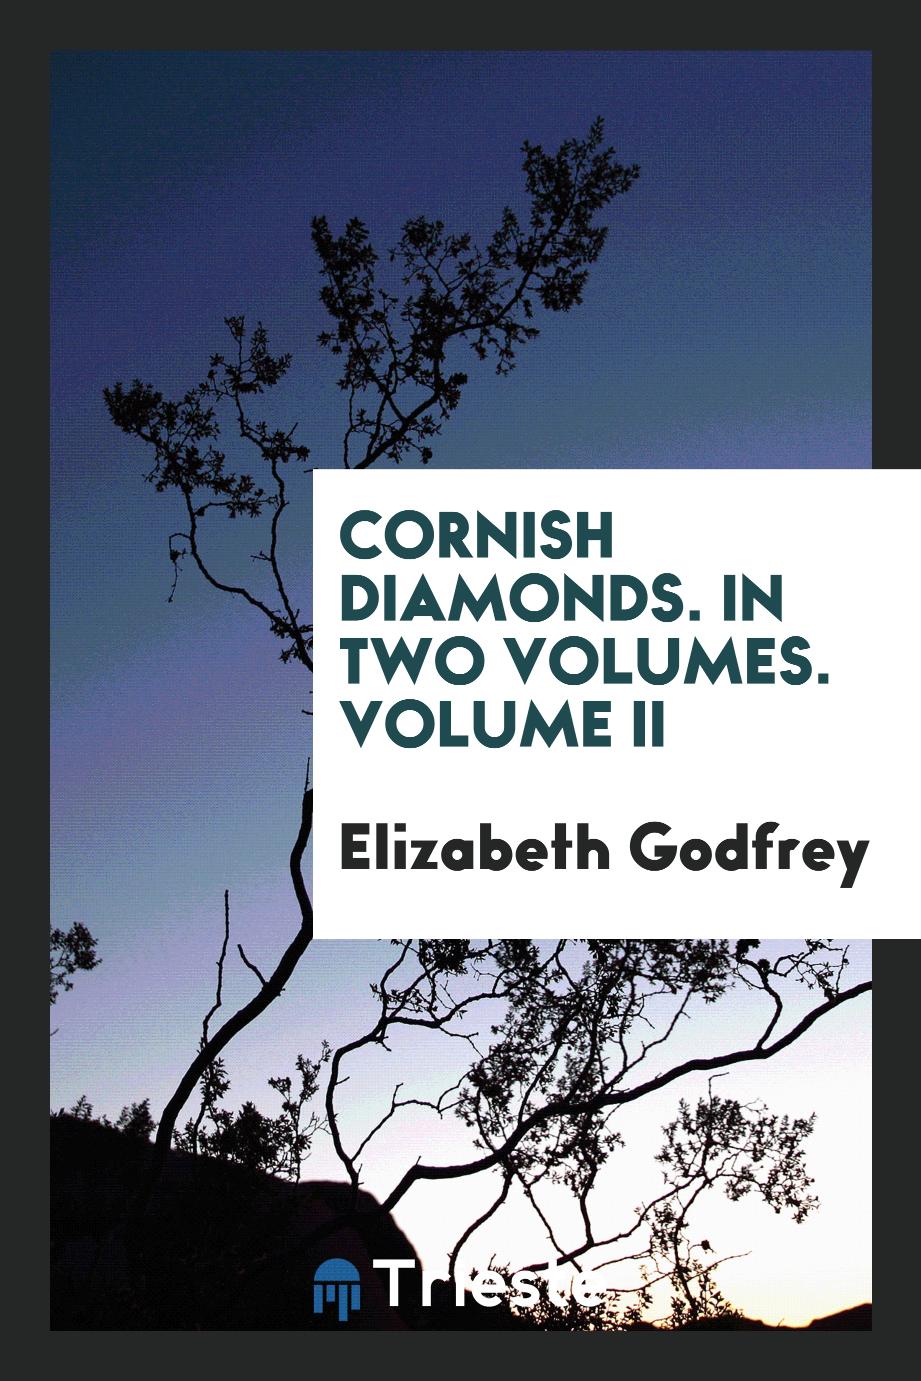 Cornish diamonds. In two volumes. Volume II